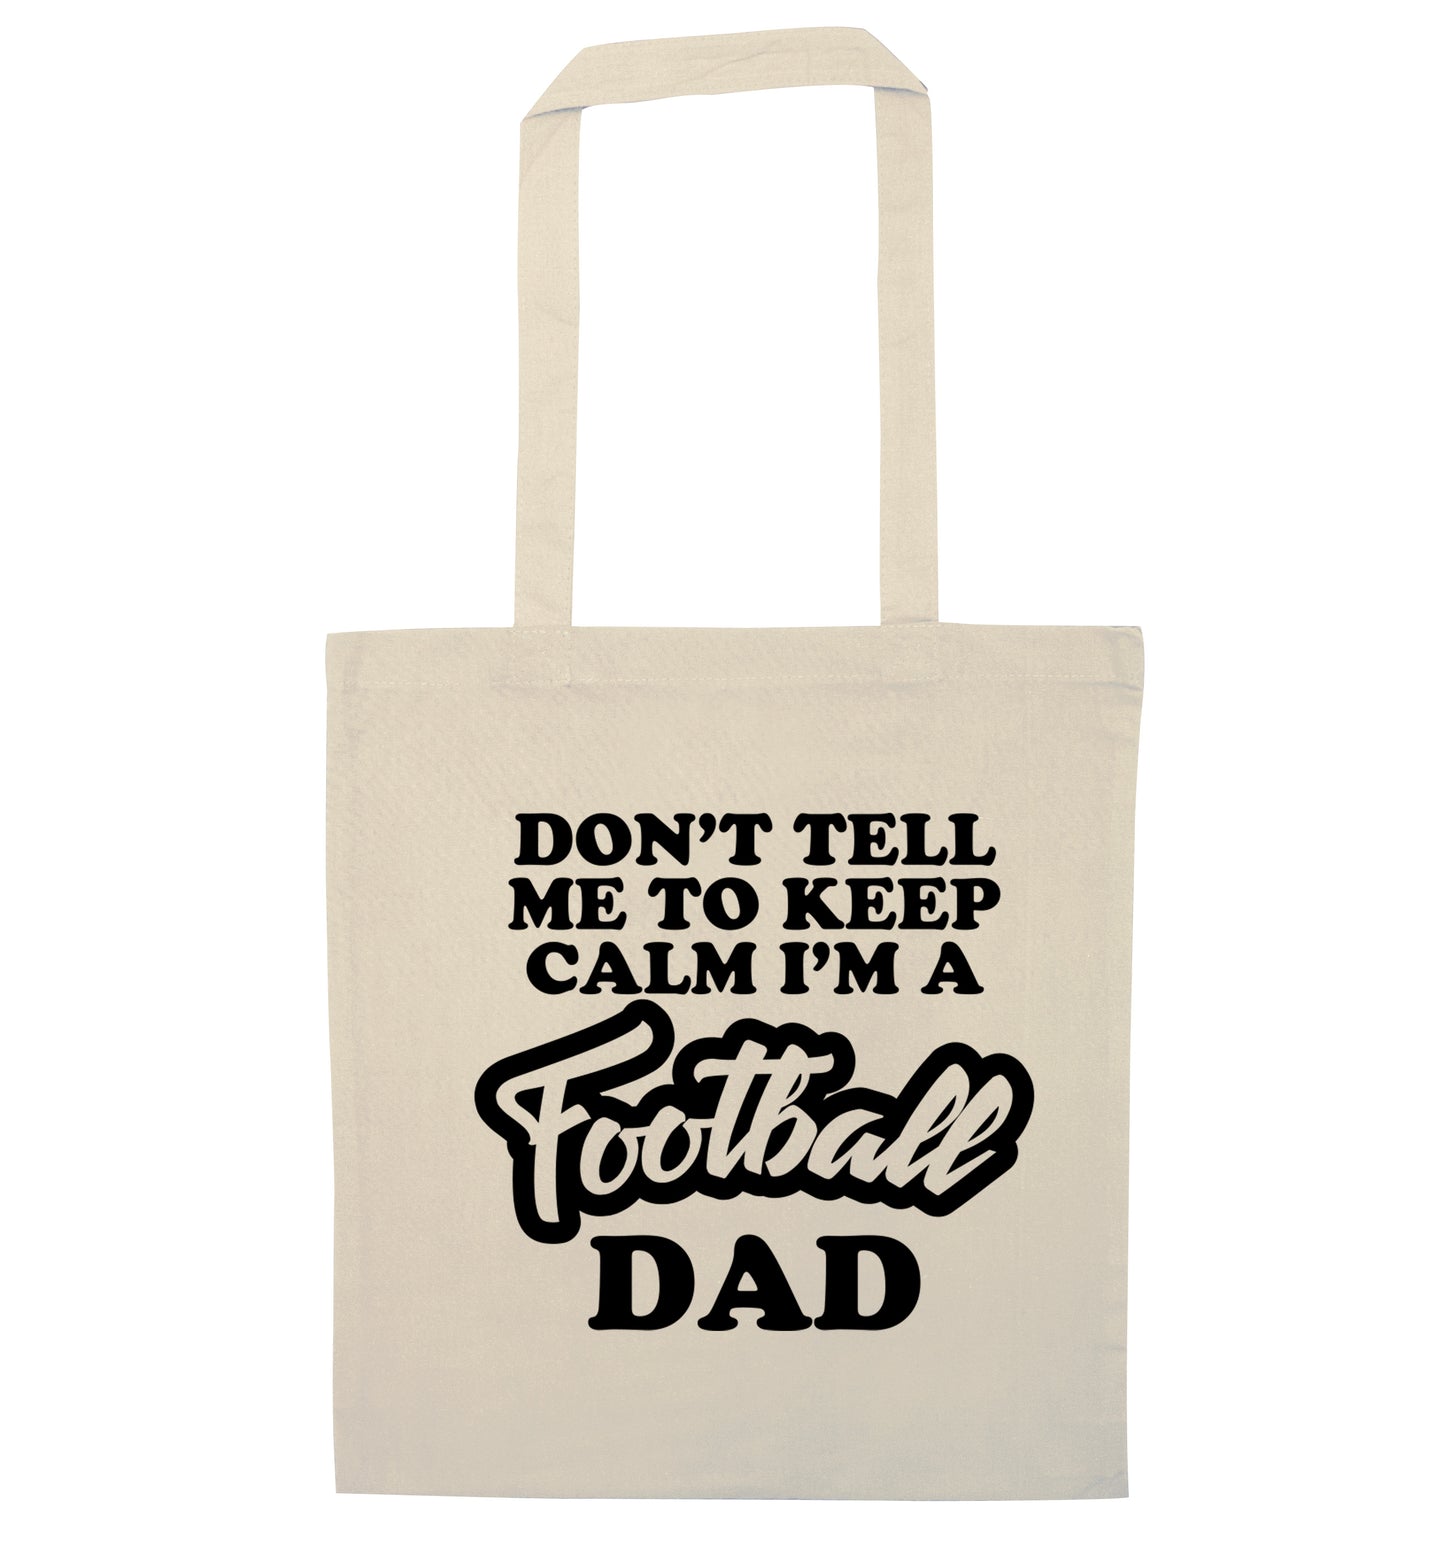 Don't tell me to keep calm I'm a football grandad natural tote bag